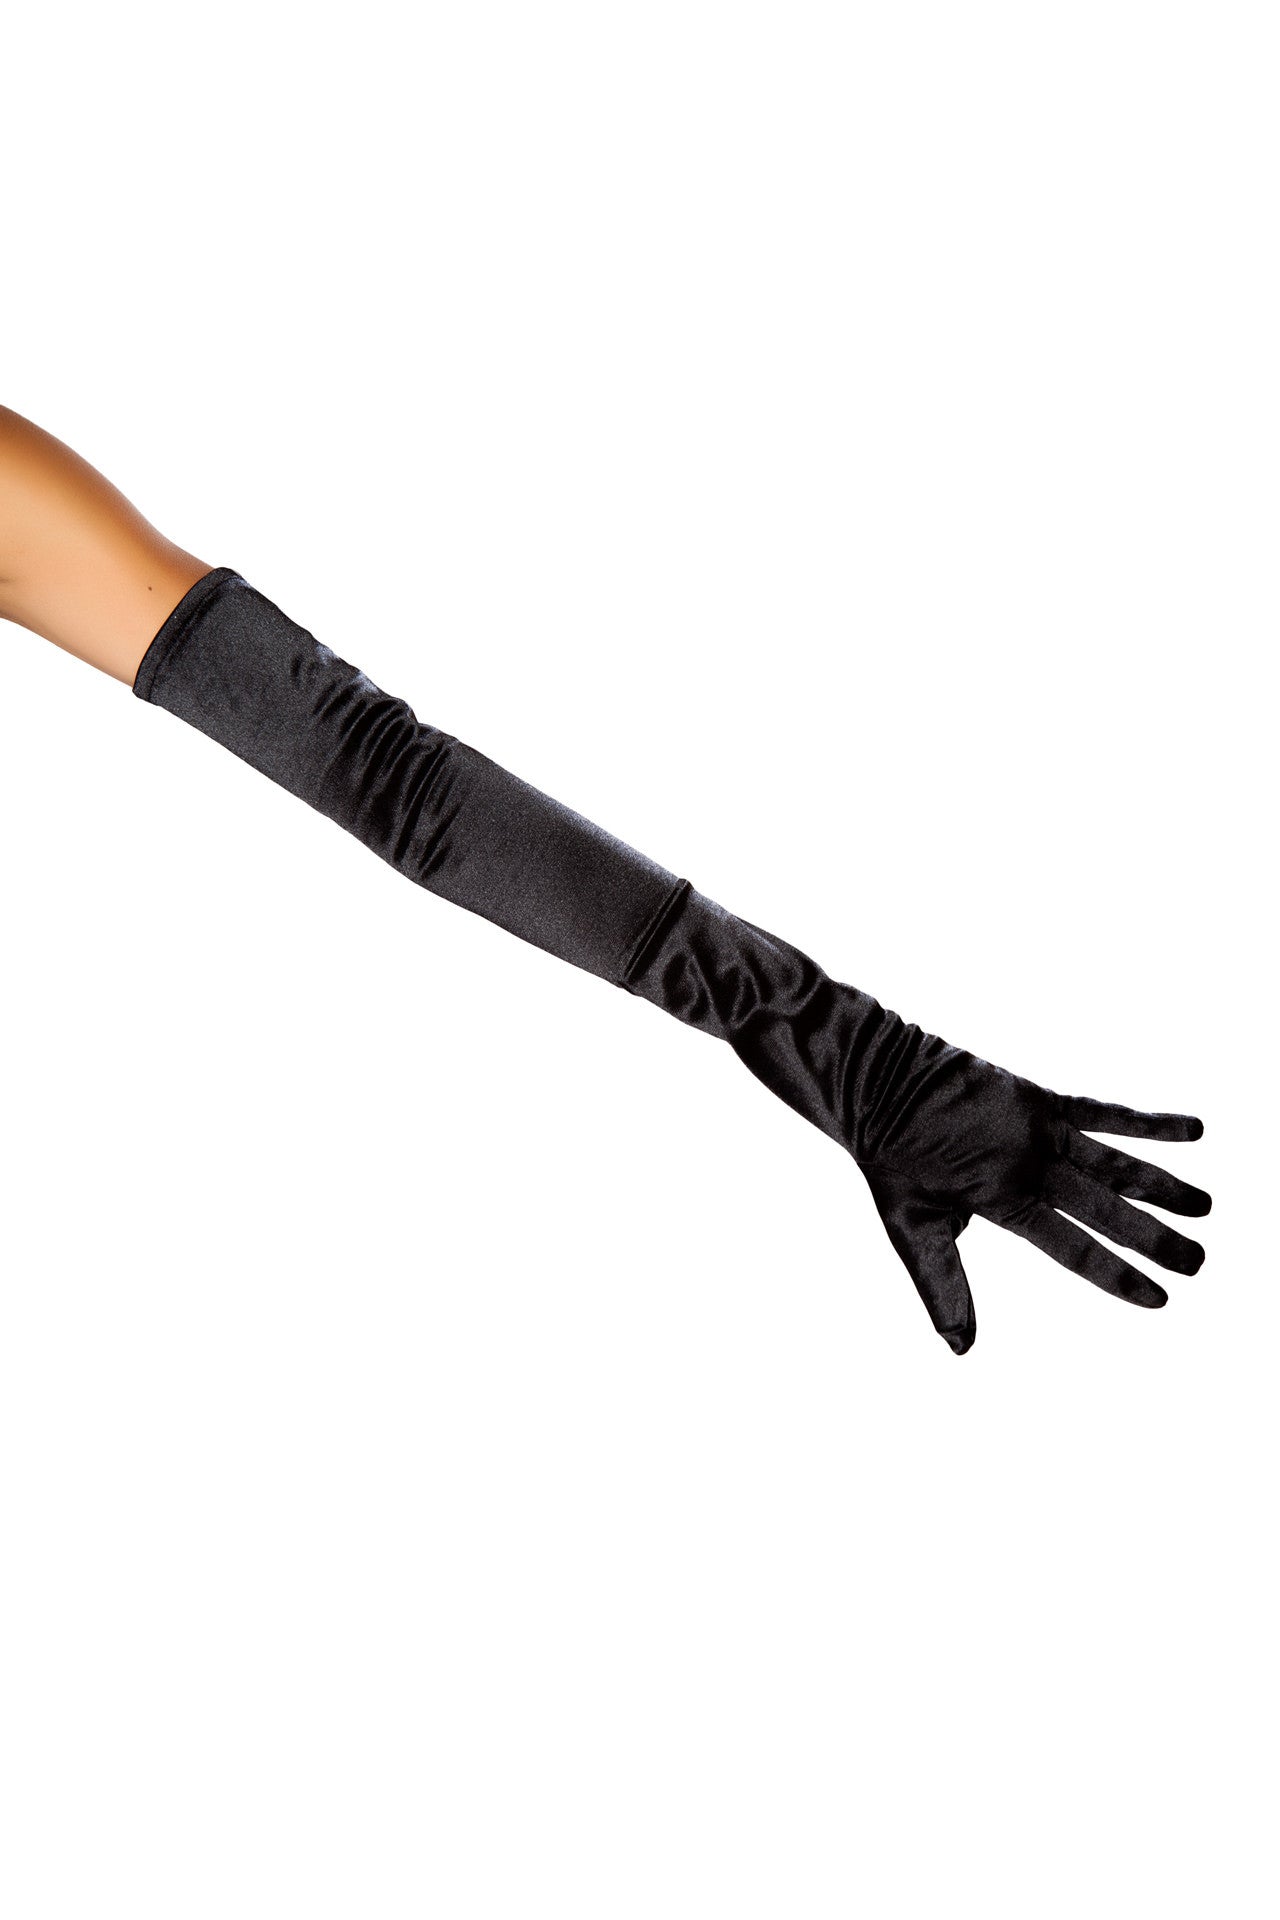 10104 - Stretch Satin Gloves Eye Candy Sensation